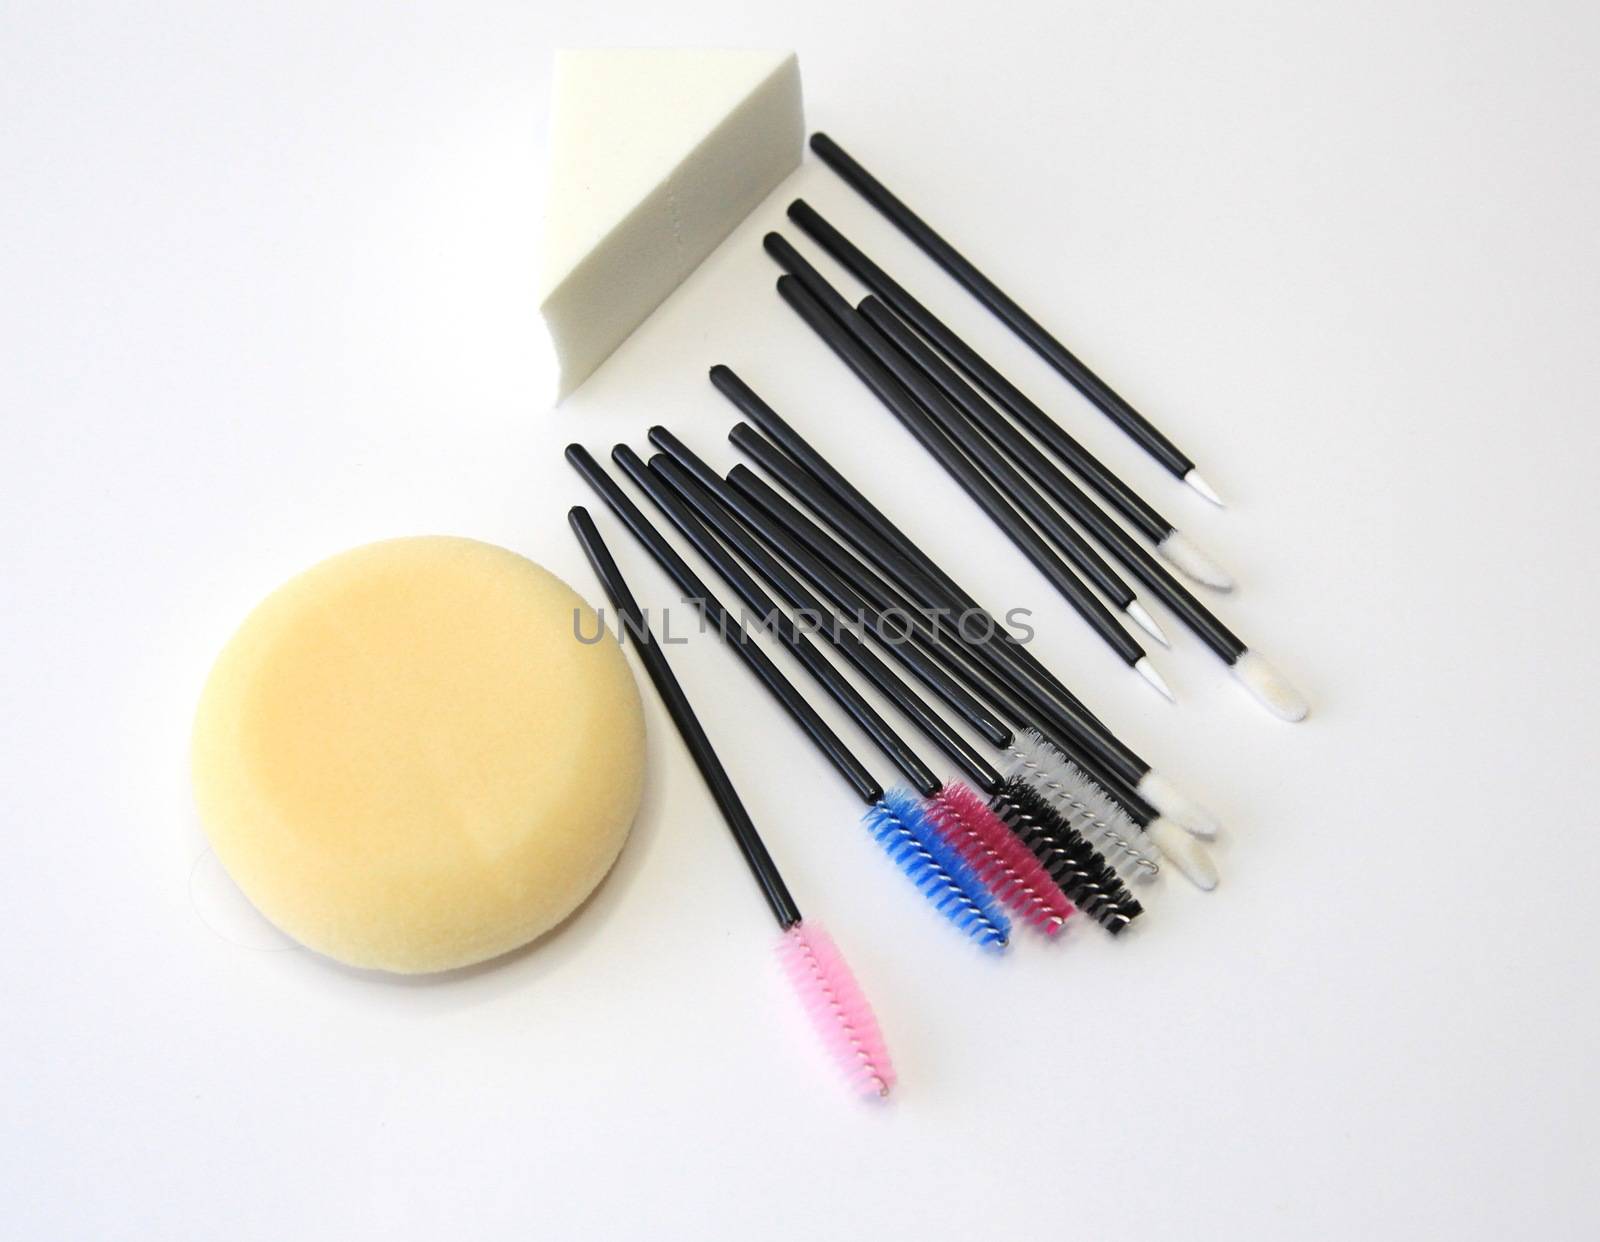 Display beauty hygiene makeup disposable brush wand applicator sponge